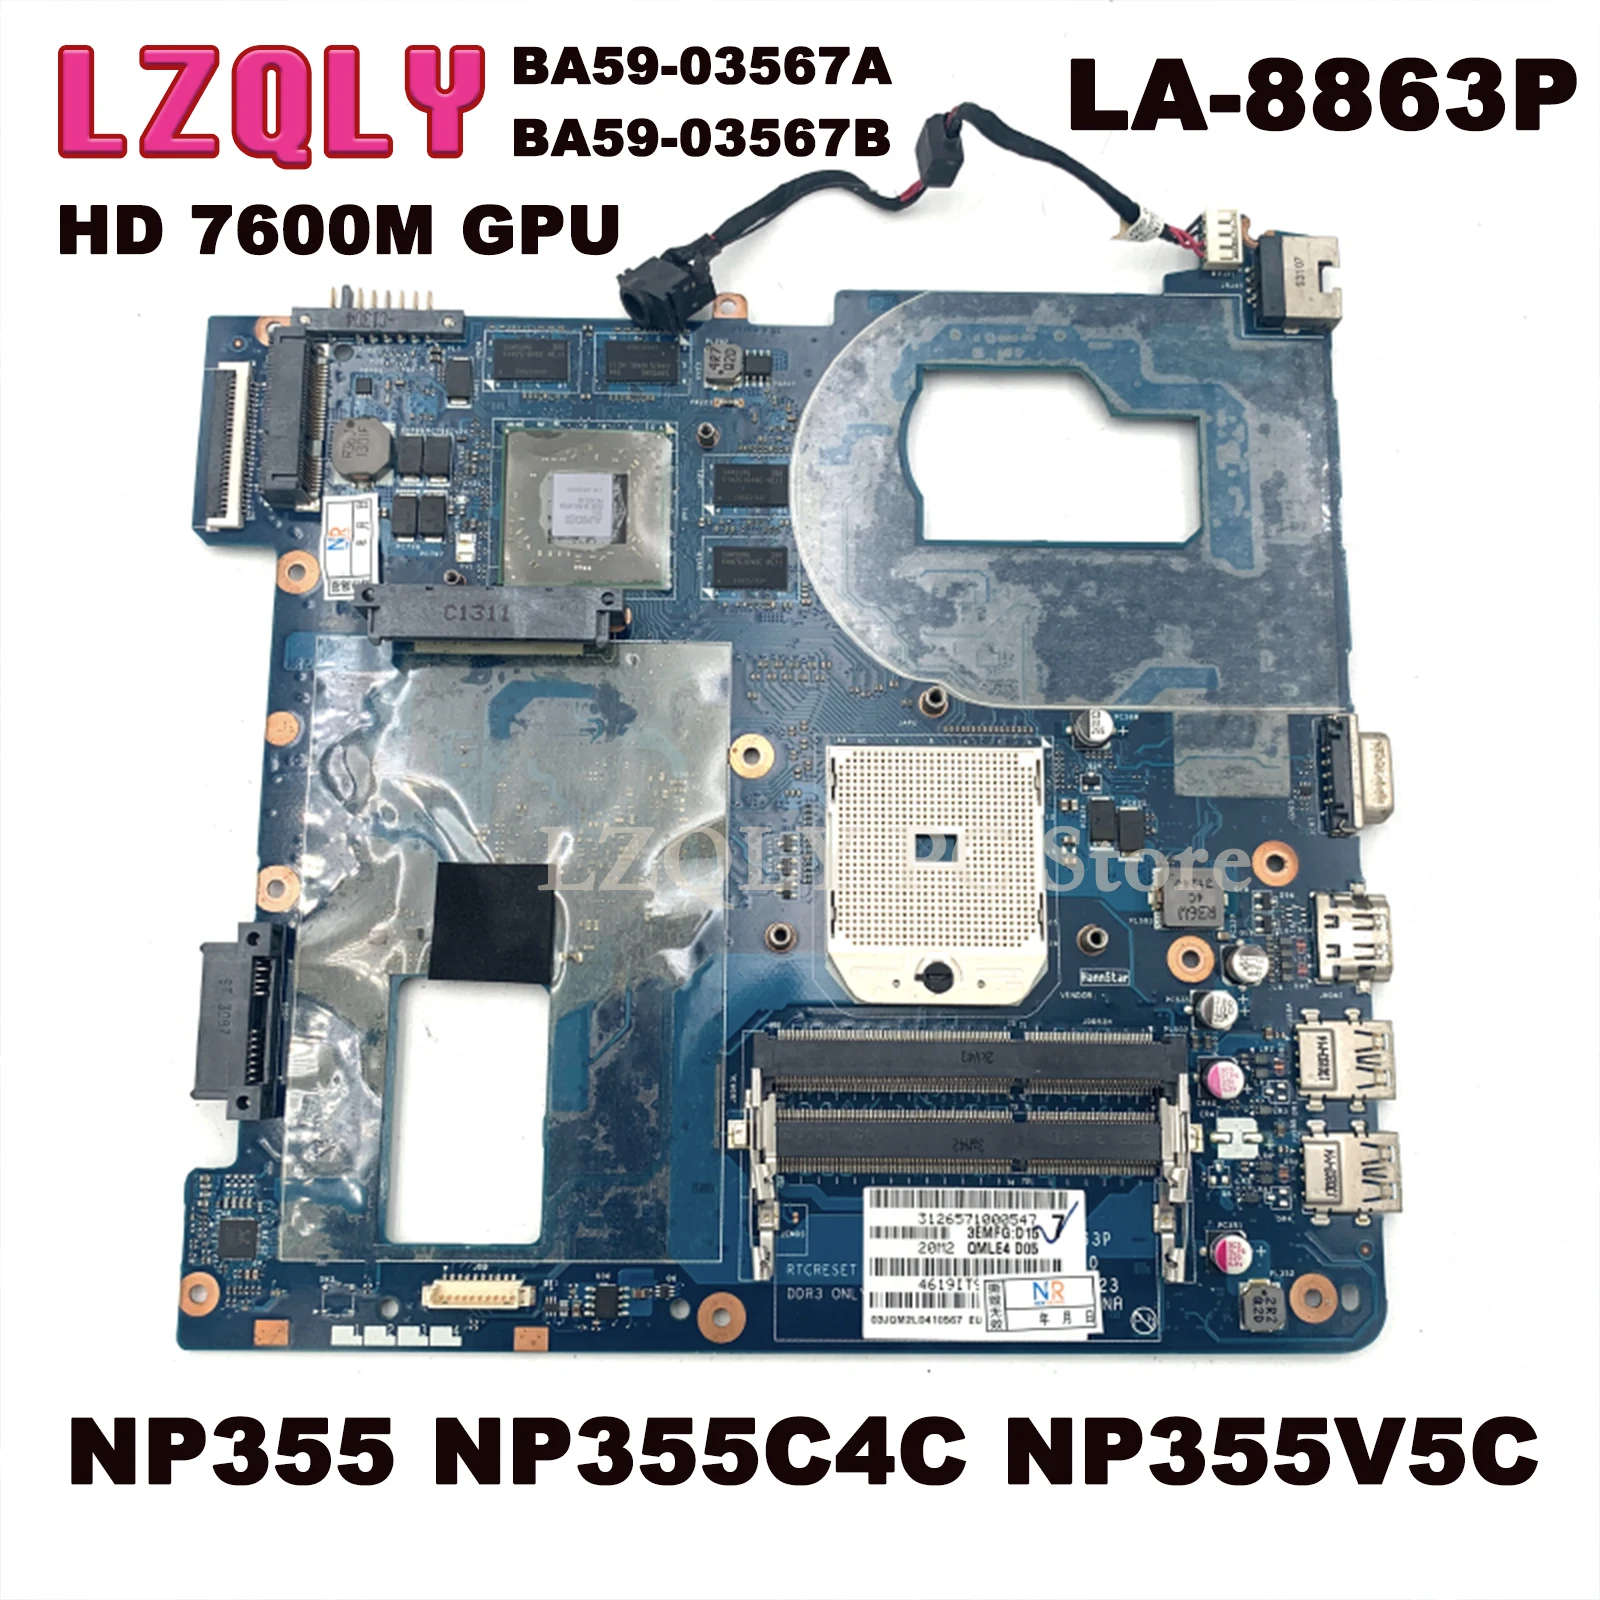 LZQLY LA-8863P QMLE4 BA59-03567A BA59-03567B For Samsung NP355 NP355C4C NP355V5C Laptop Motherboard Socket fs1 HD 7600M GPU